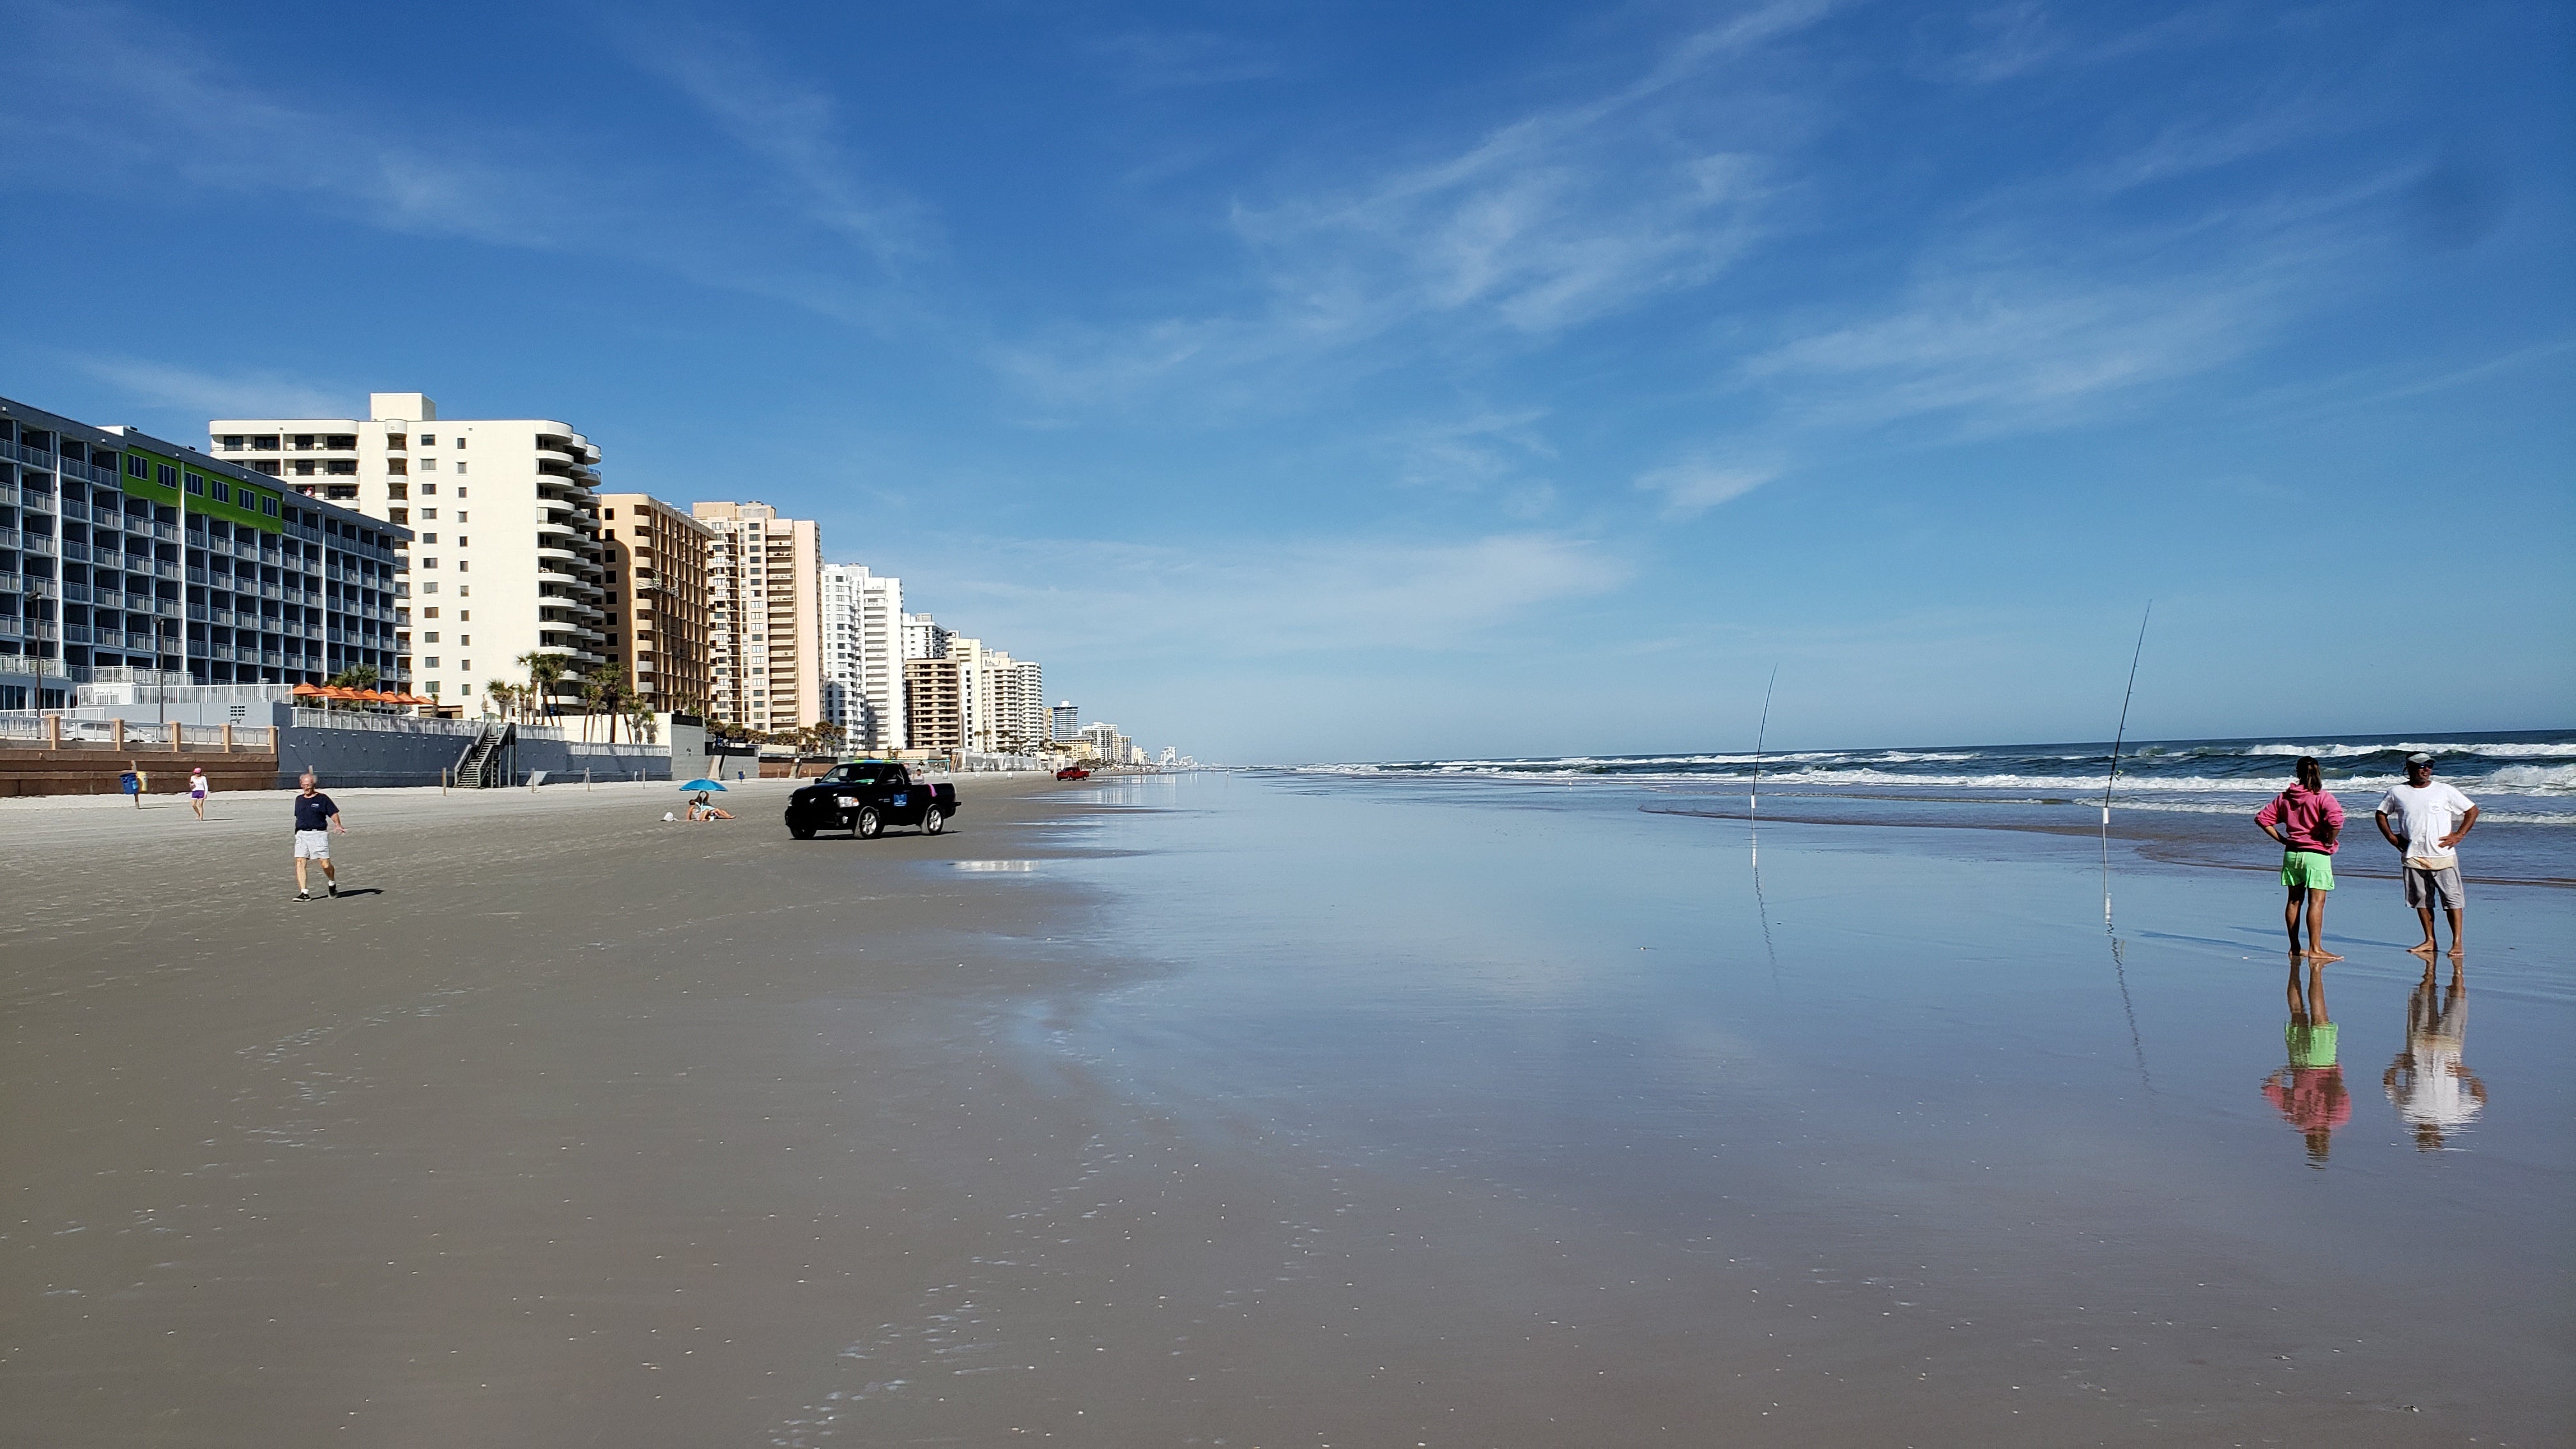 Daytona Beach is the main city in Florida’s ‘Fun Coast’ region